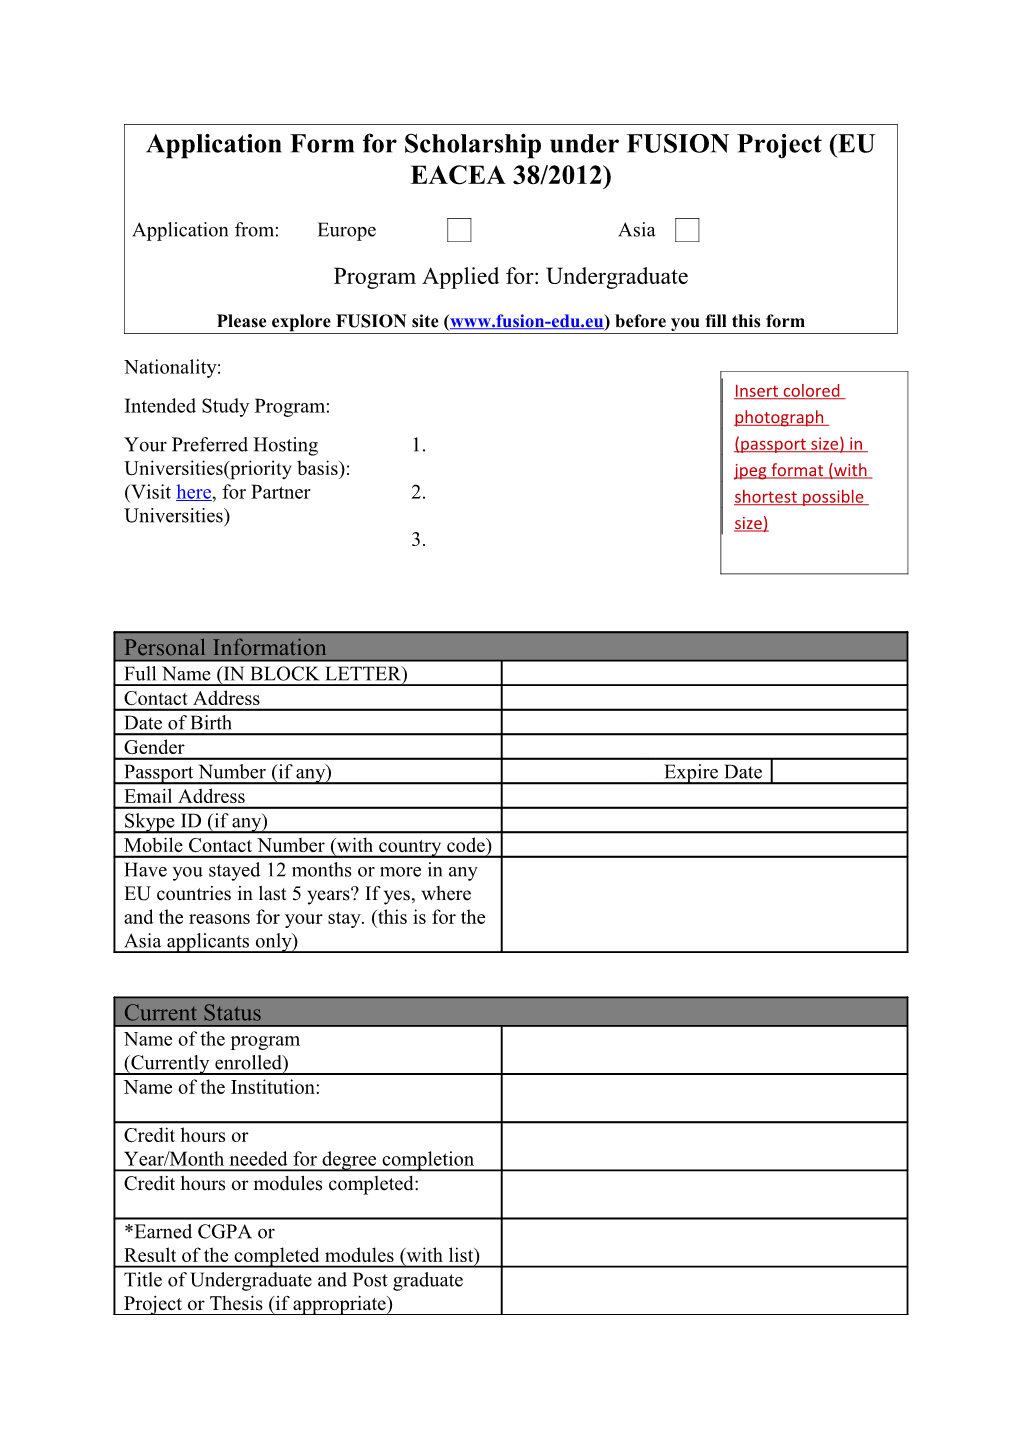 Application Form for Scholarship Under FUSION Project (EU EACEA 38/2012)